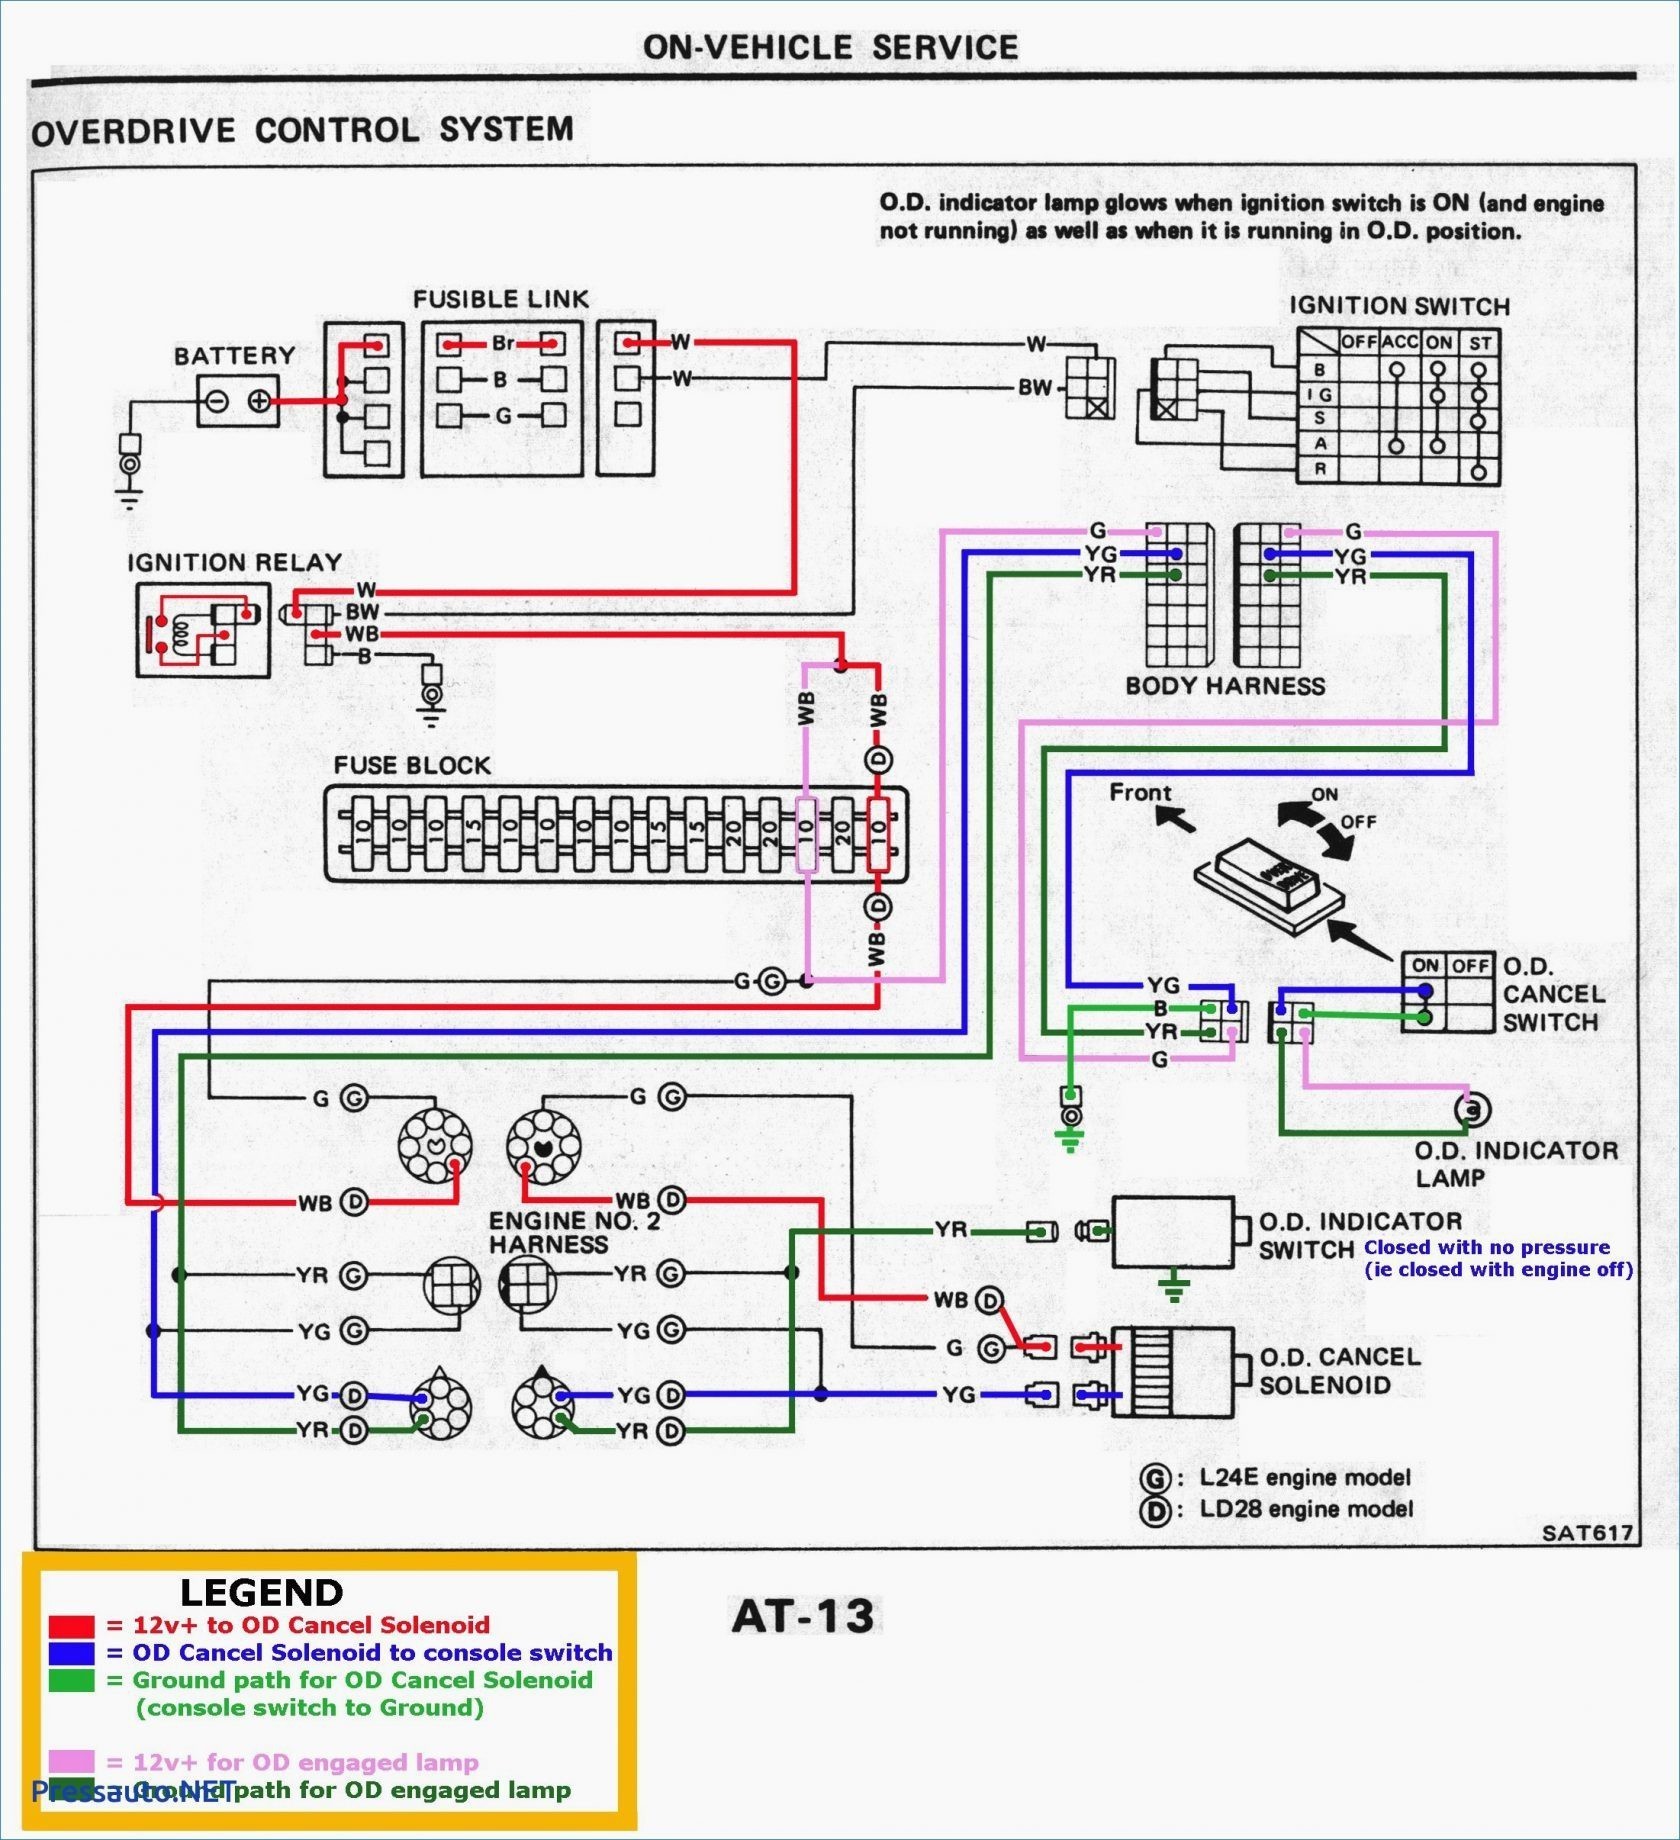 2001 Dodge Ram Radio Wiring Diagram 2001 Dodge Ram Radio Wiring Diagram Wiring Diagram toolbox